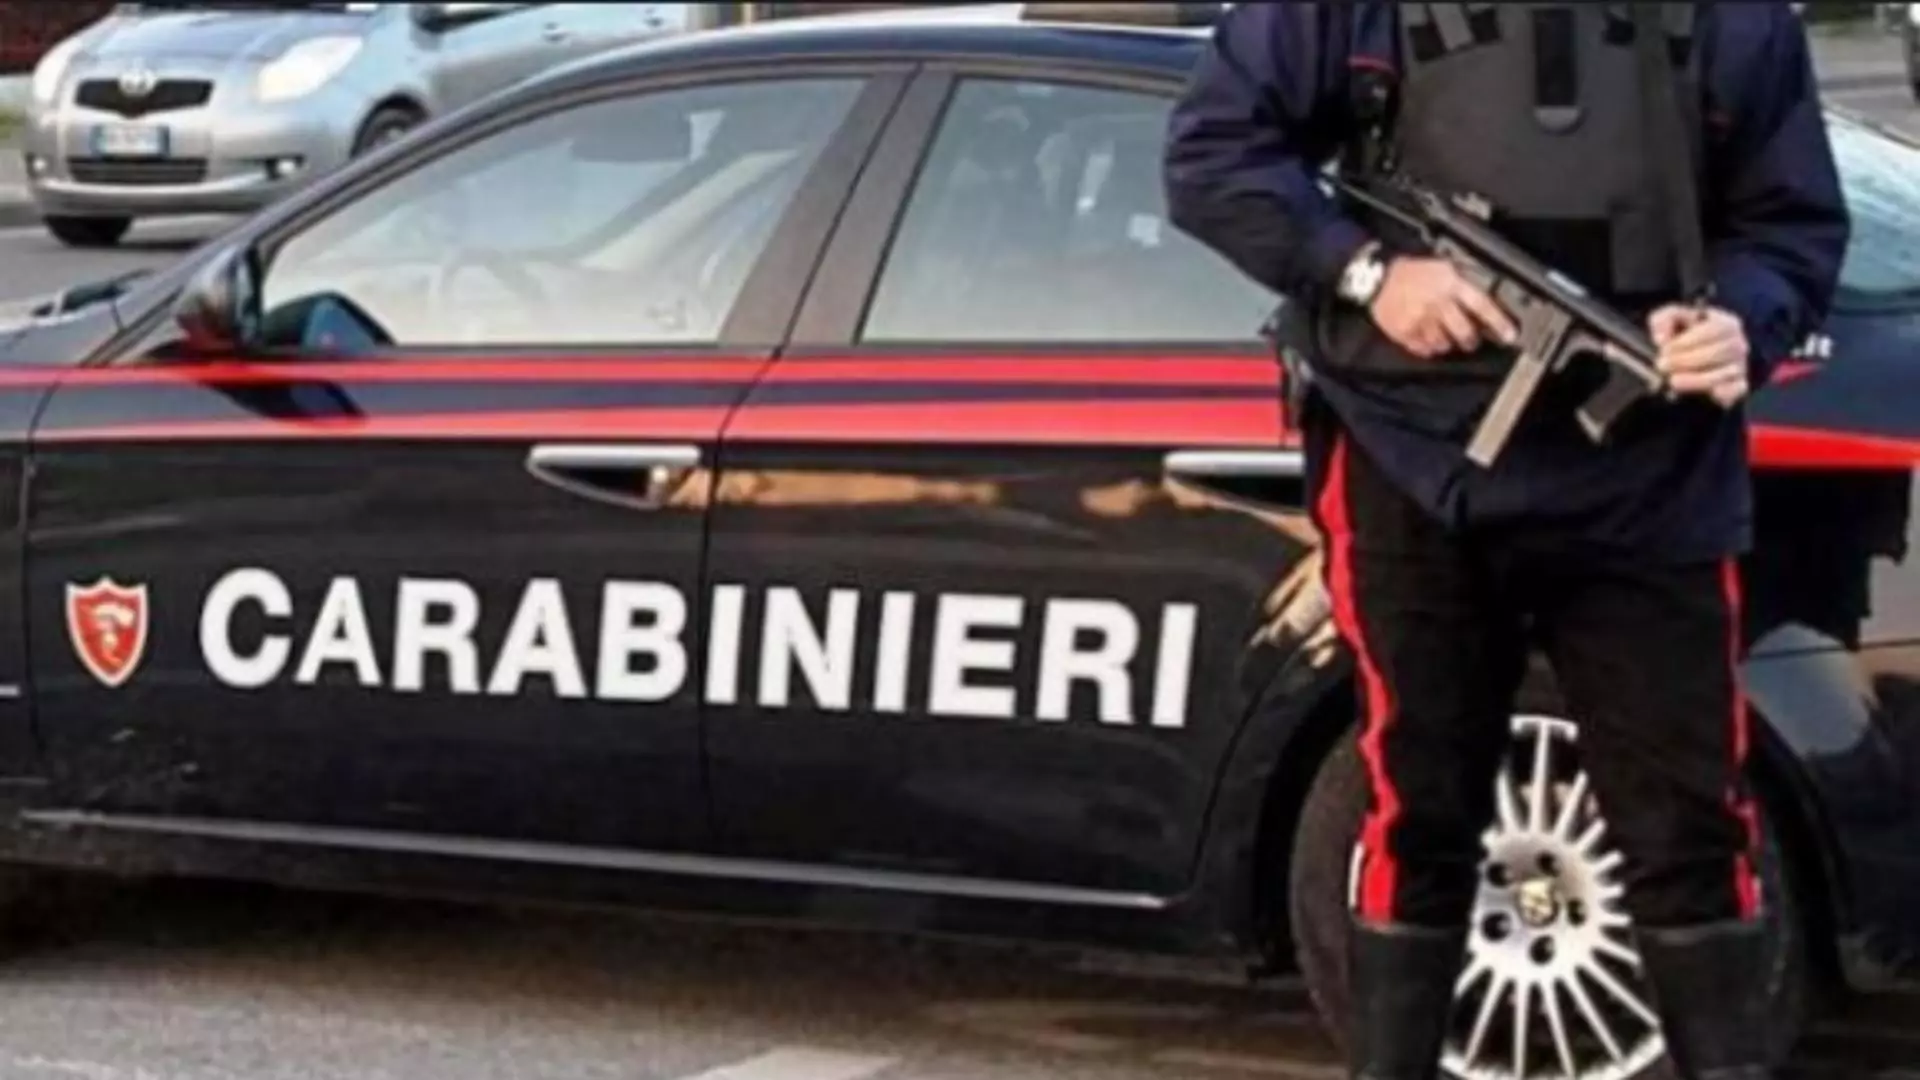 Carabinieri Italia